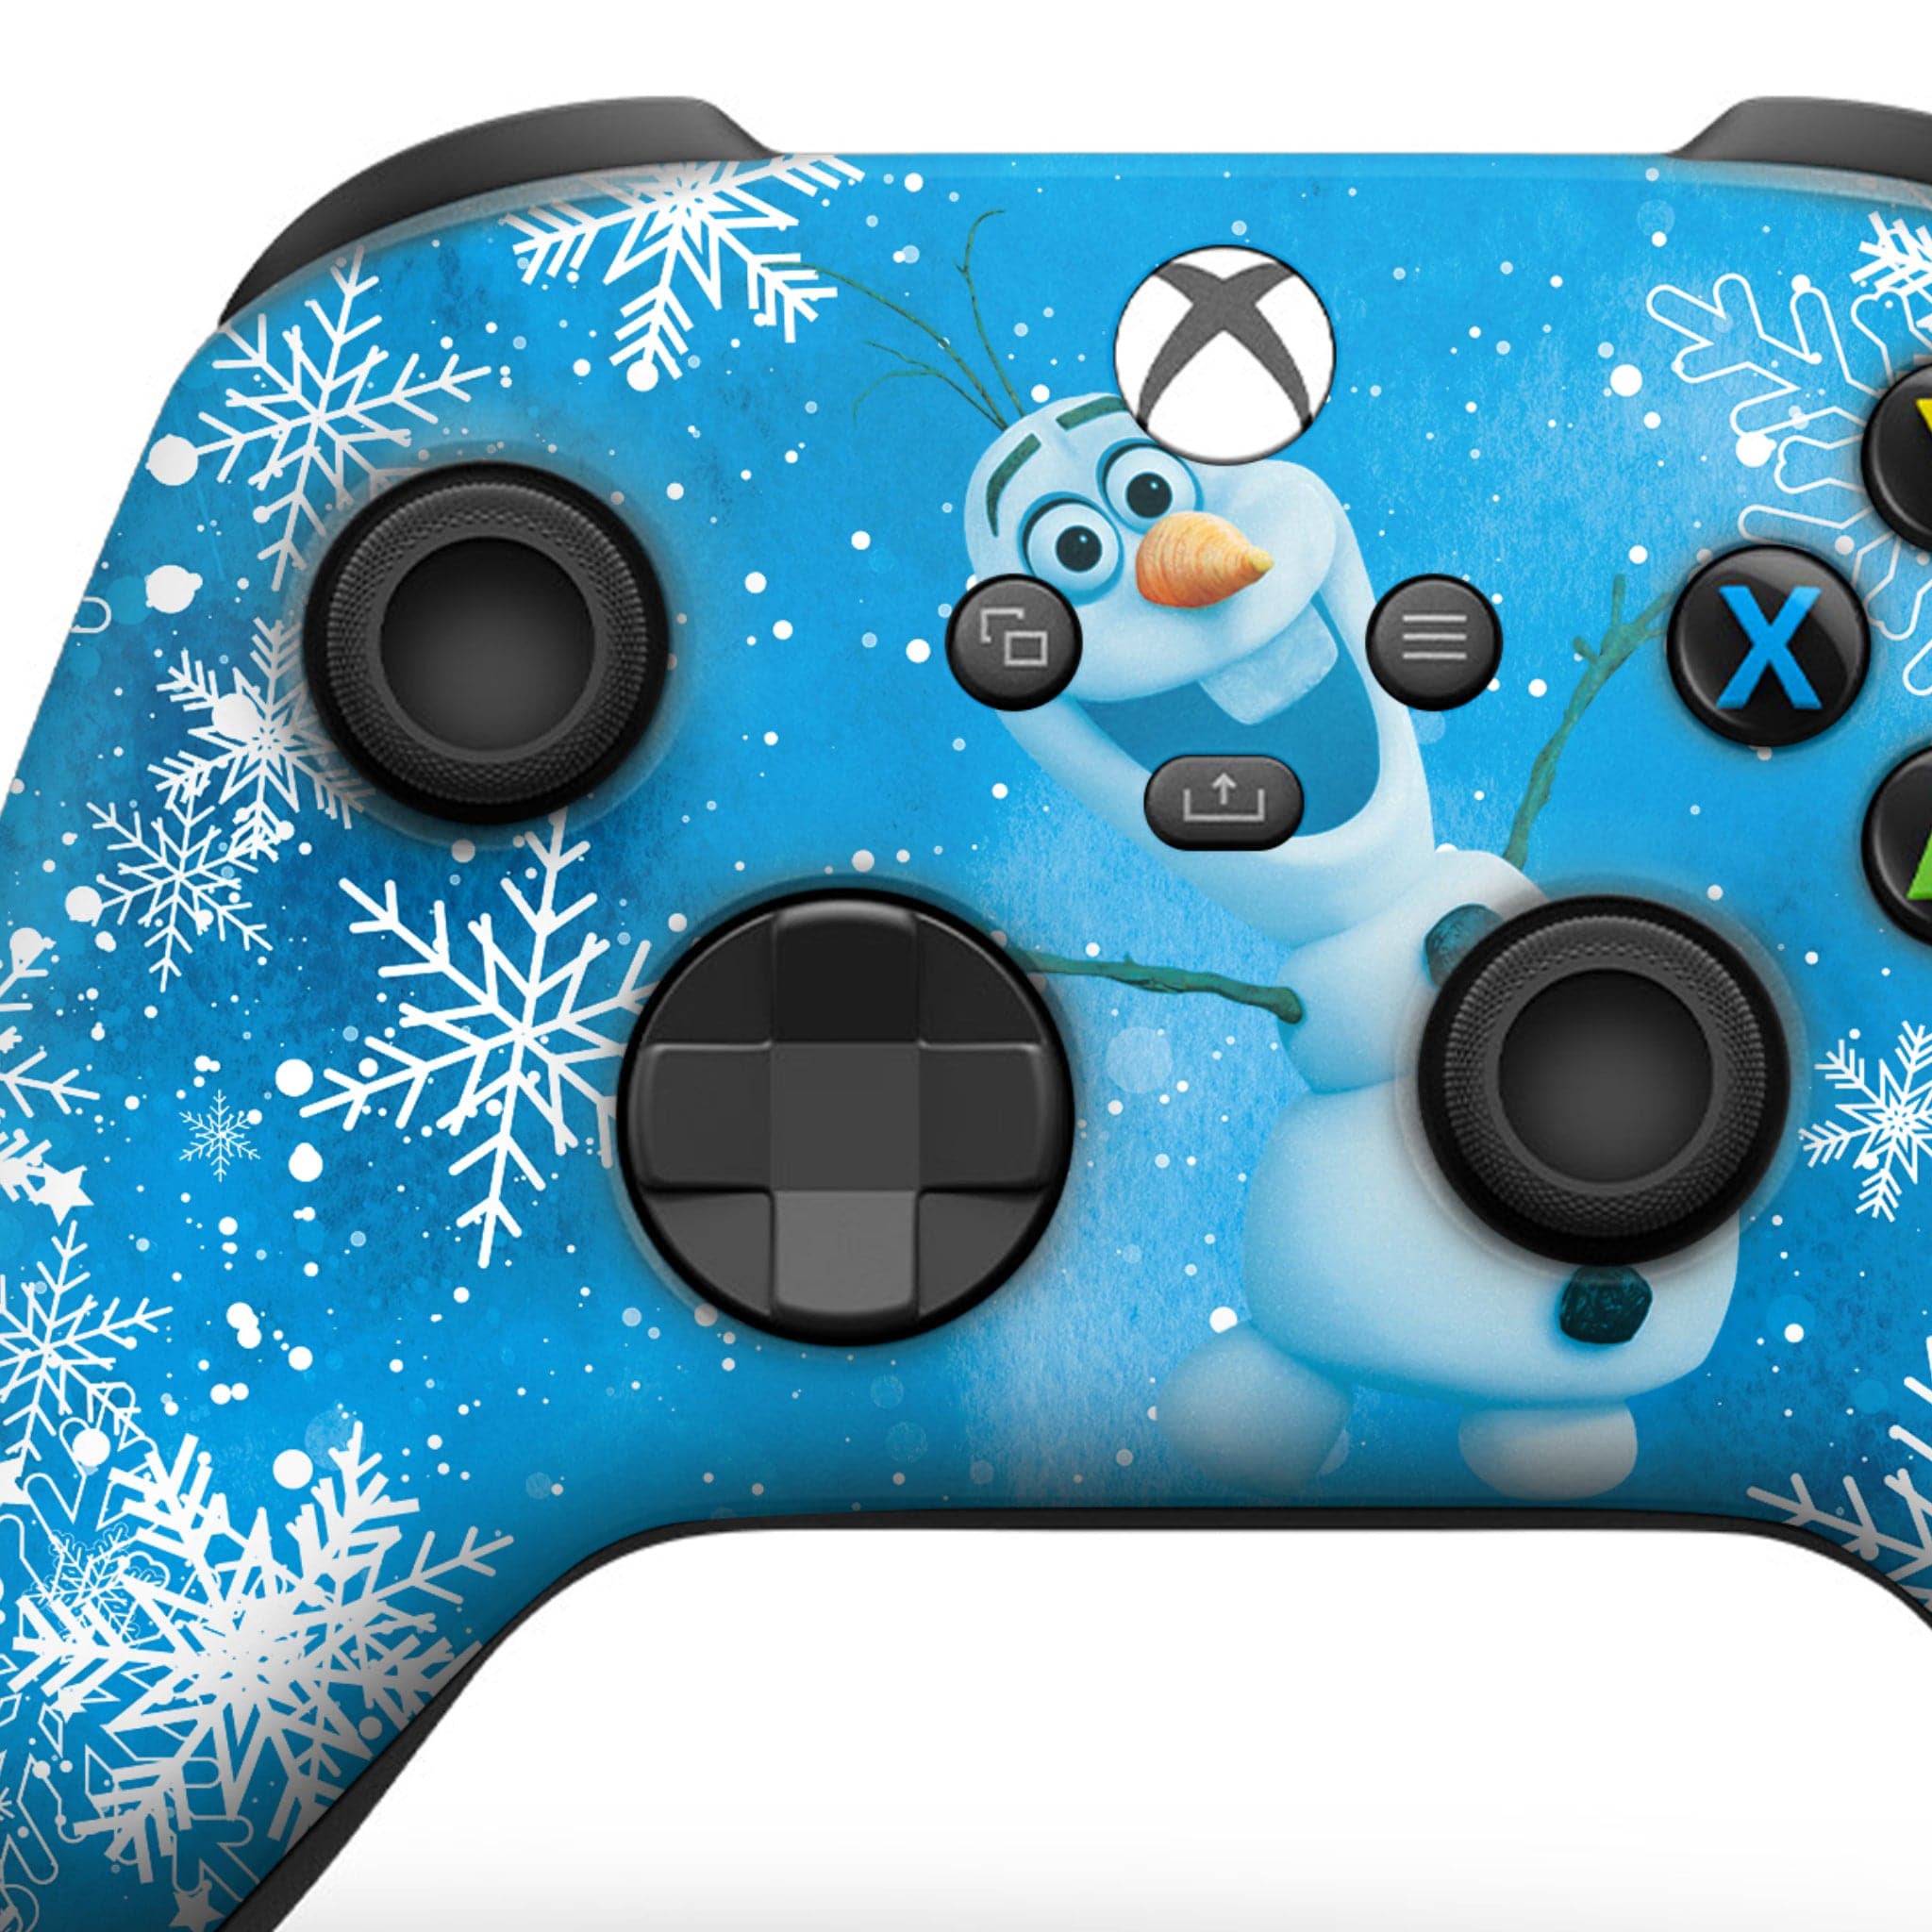 Olaf's Frozen Adventure Xbox Series X Controller: Cool Xbox Series X Controller